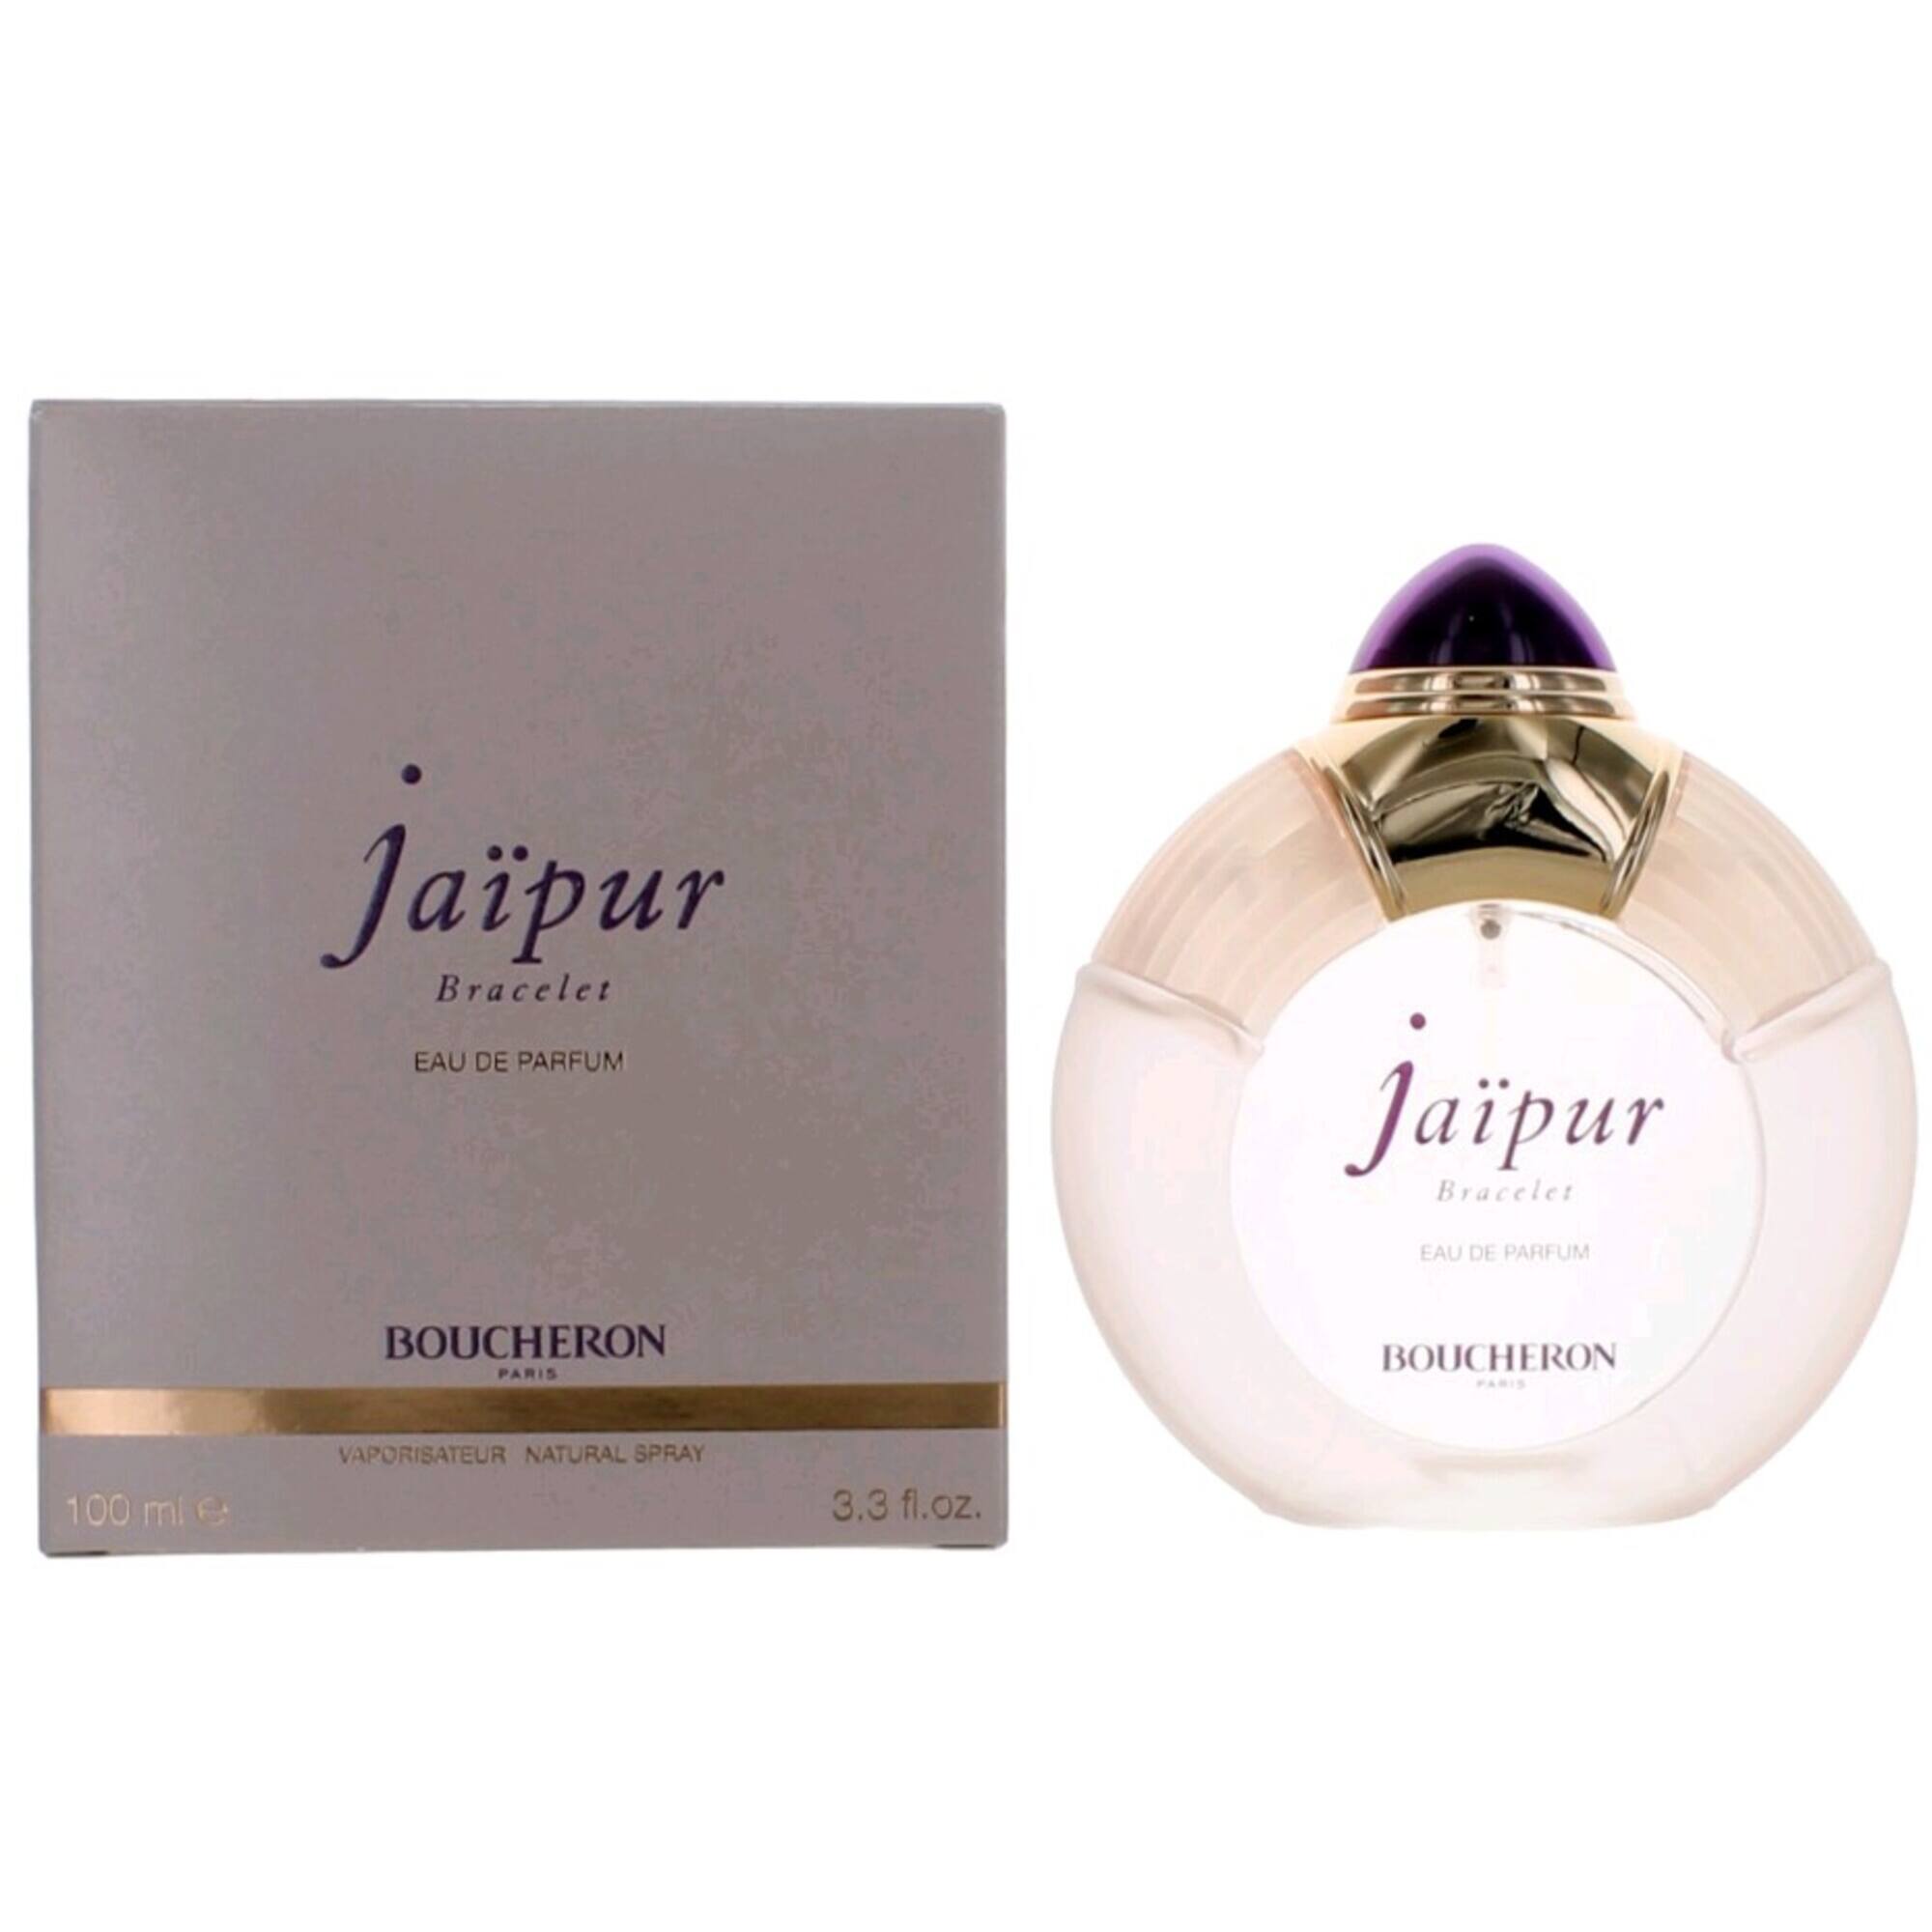 Boucheron Women's Eau De Parfum Spray - Jaipur Bracelet Natural Freshness, 3.3 oz